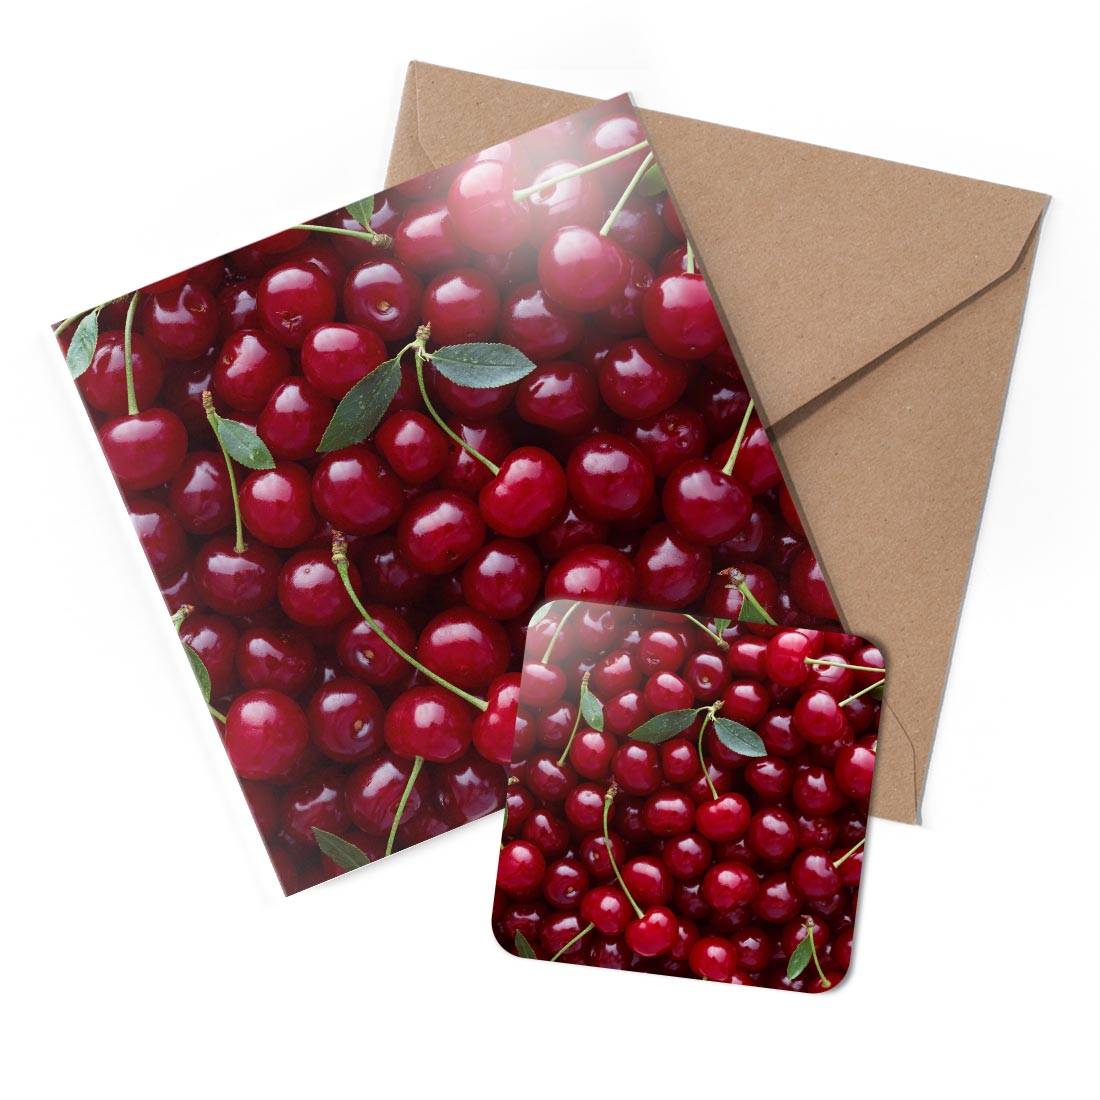 1 x Greeting Card & Coaster Set - Juicy Red Cherries Cherry #51262